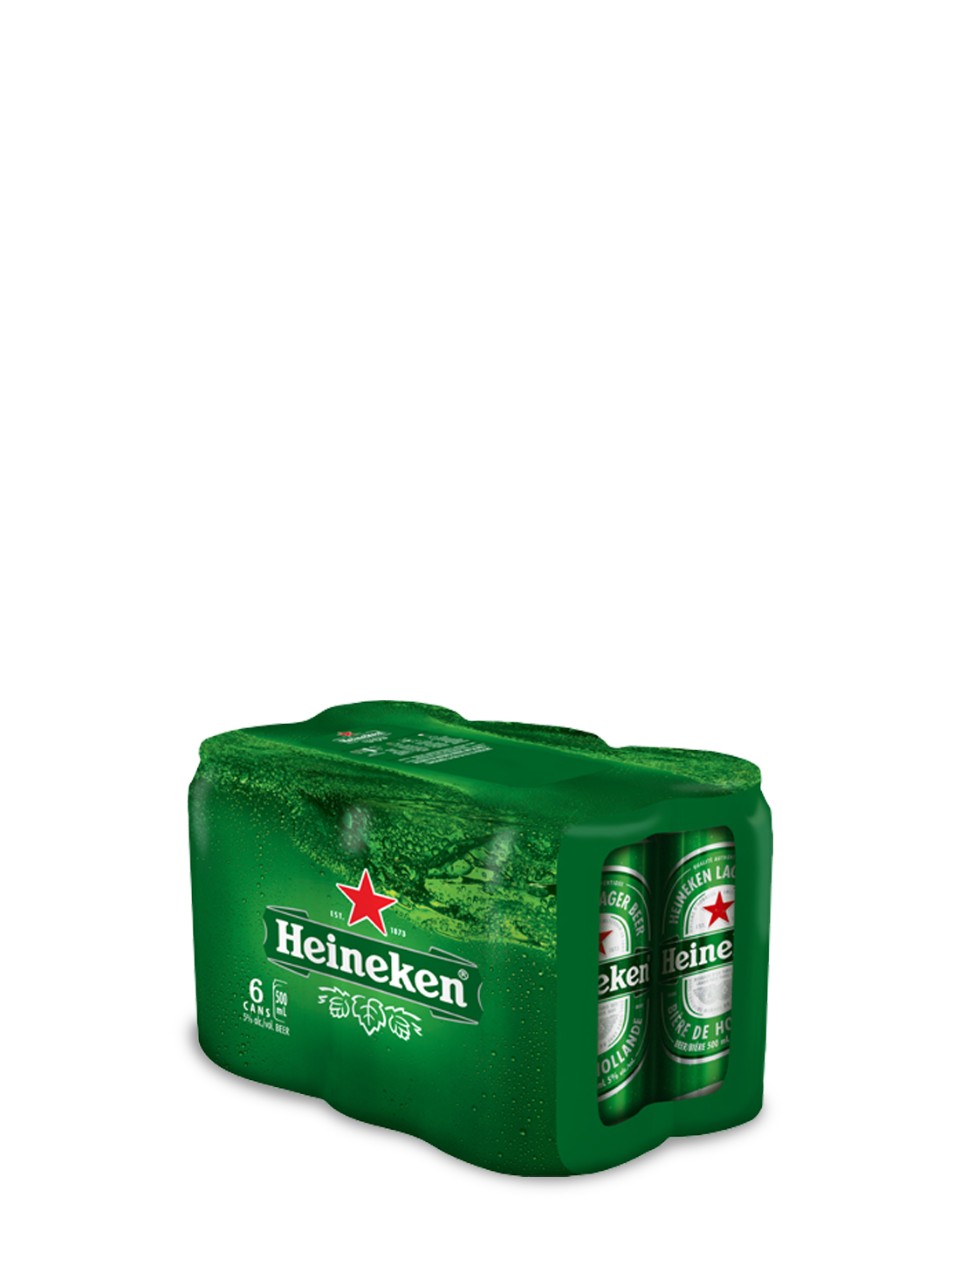 Heineken (6 x 330 ml can)